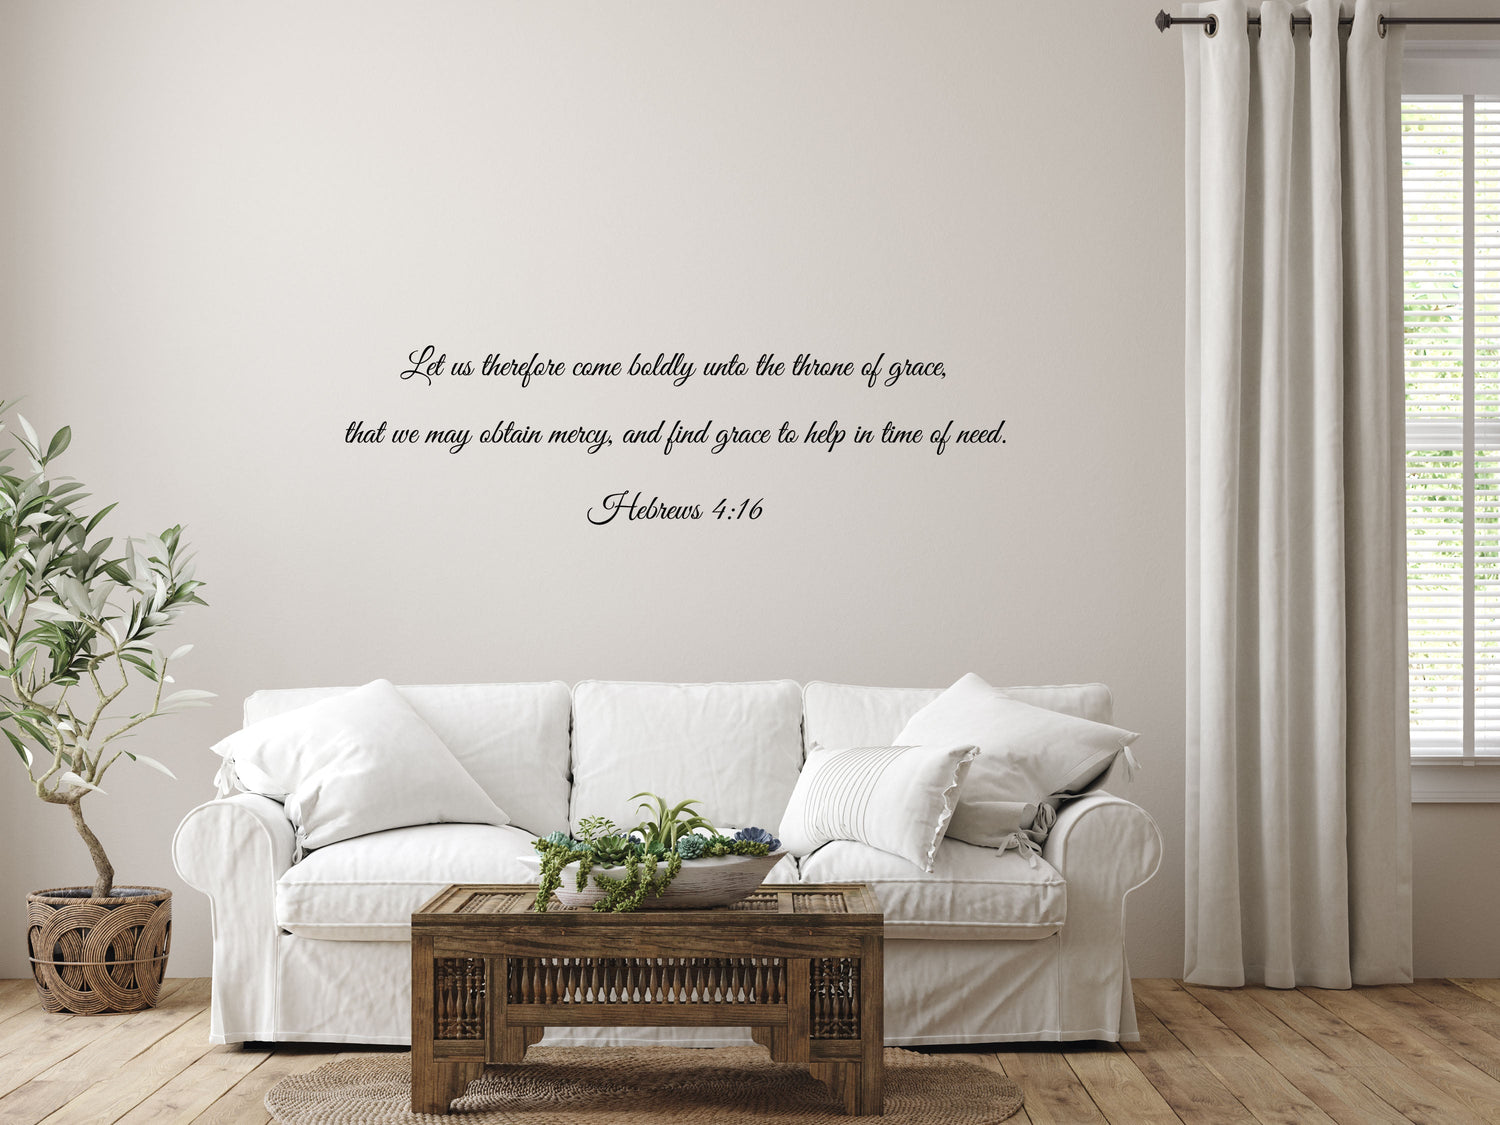 Hebrews 4:16 - Christian Wall Scripture Vinyl Wall Decal Inspirational Wall Signs 